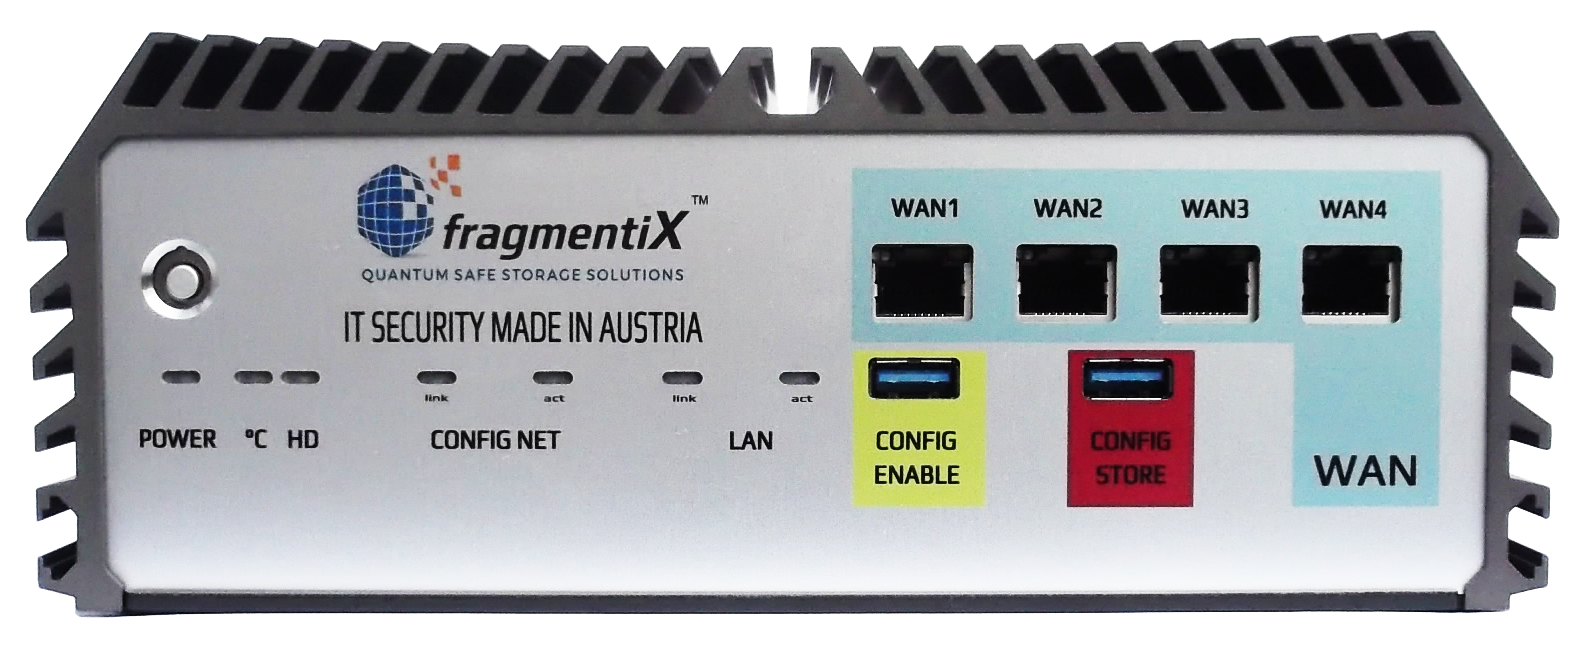 fragmentiX frente da caixa